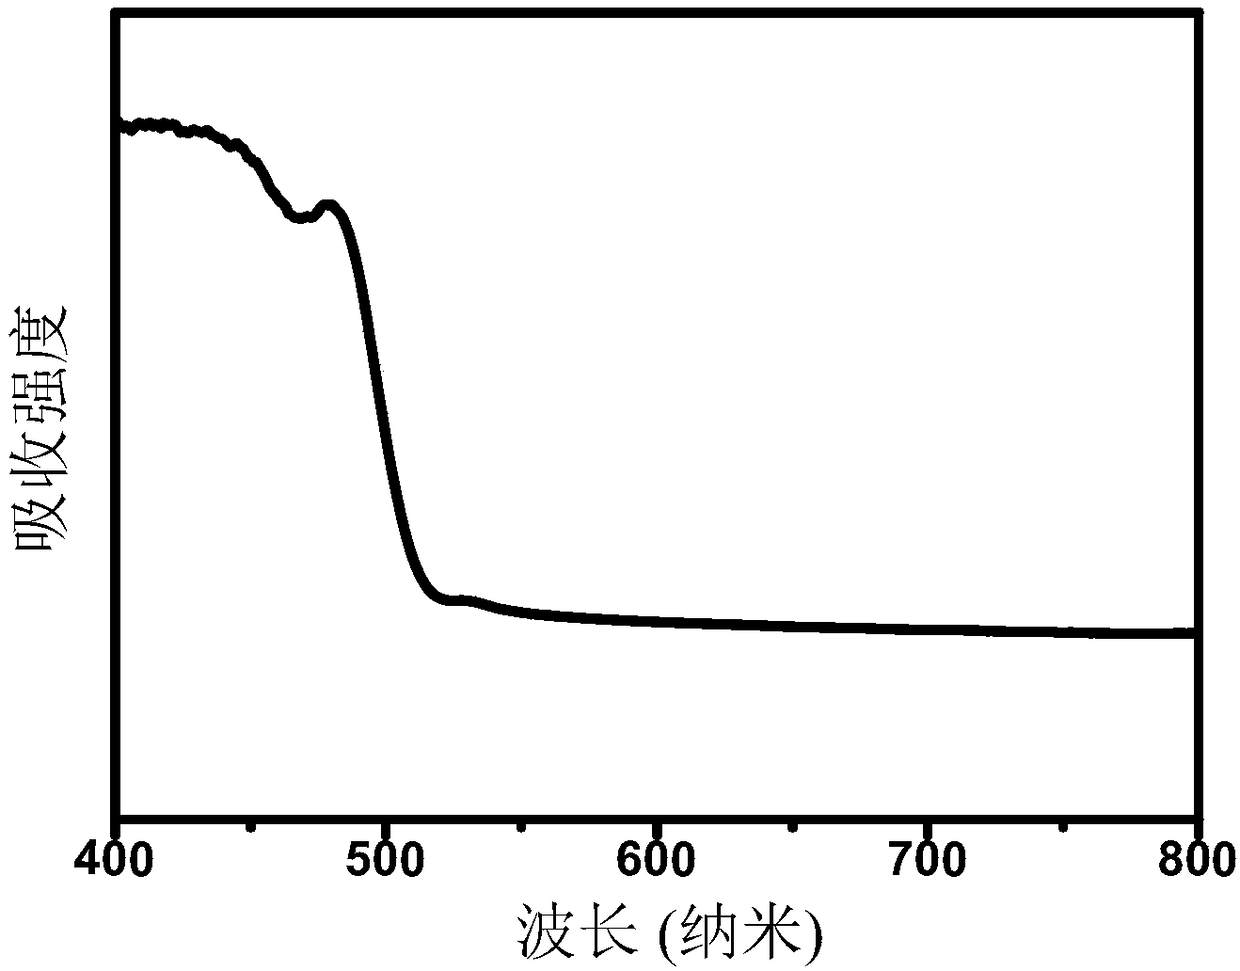 Method for preparing organic-inorganic hybrid perovskite CH3NH3PbBr3 quantum dot with high brightness stability